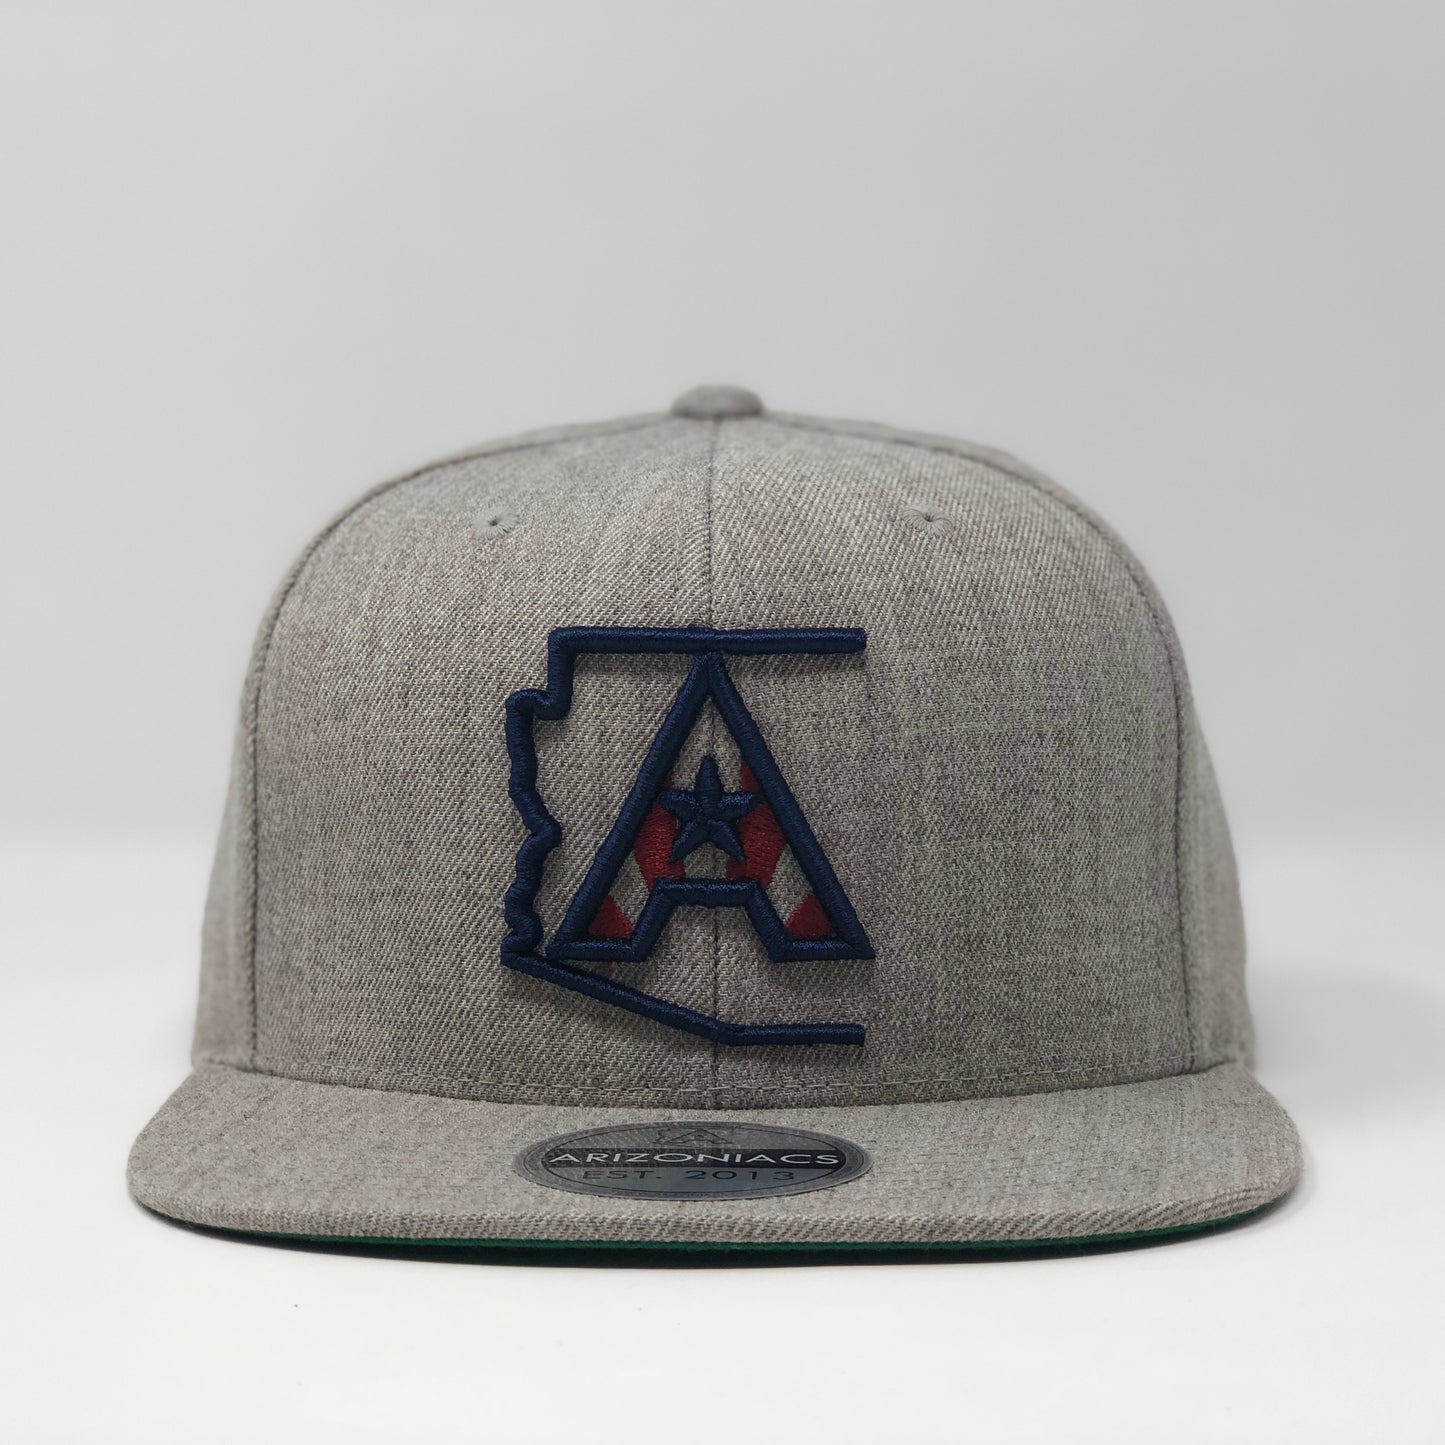 Arizoniacs Logo Flatbill Snapback Cap - Grey with Navy/Red